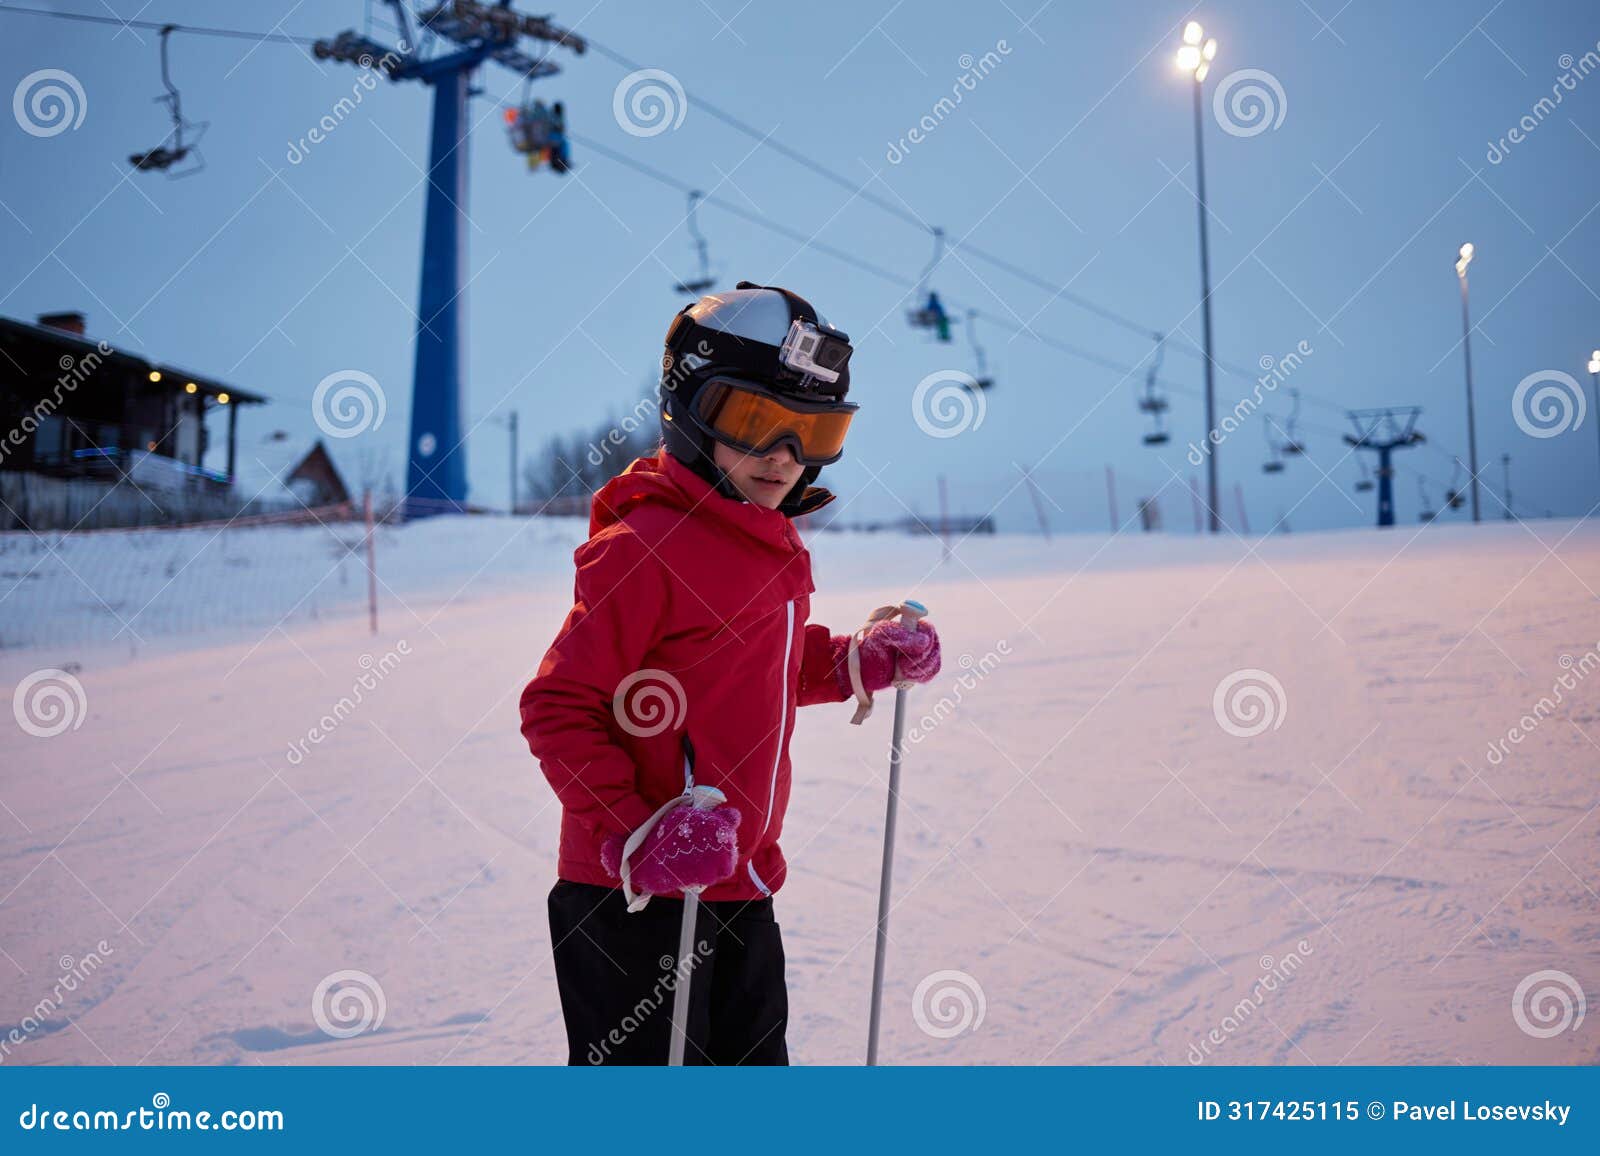 girl in helmet with camera skiing on snowy slope